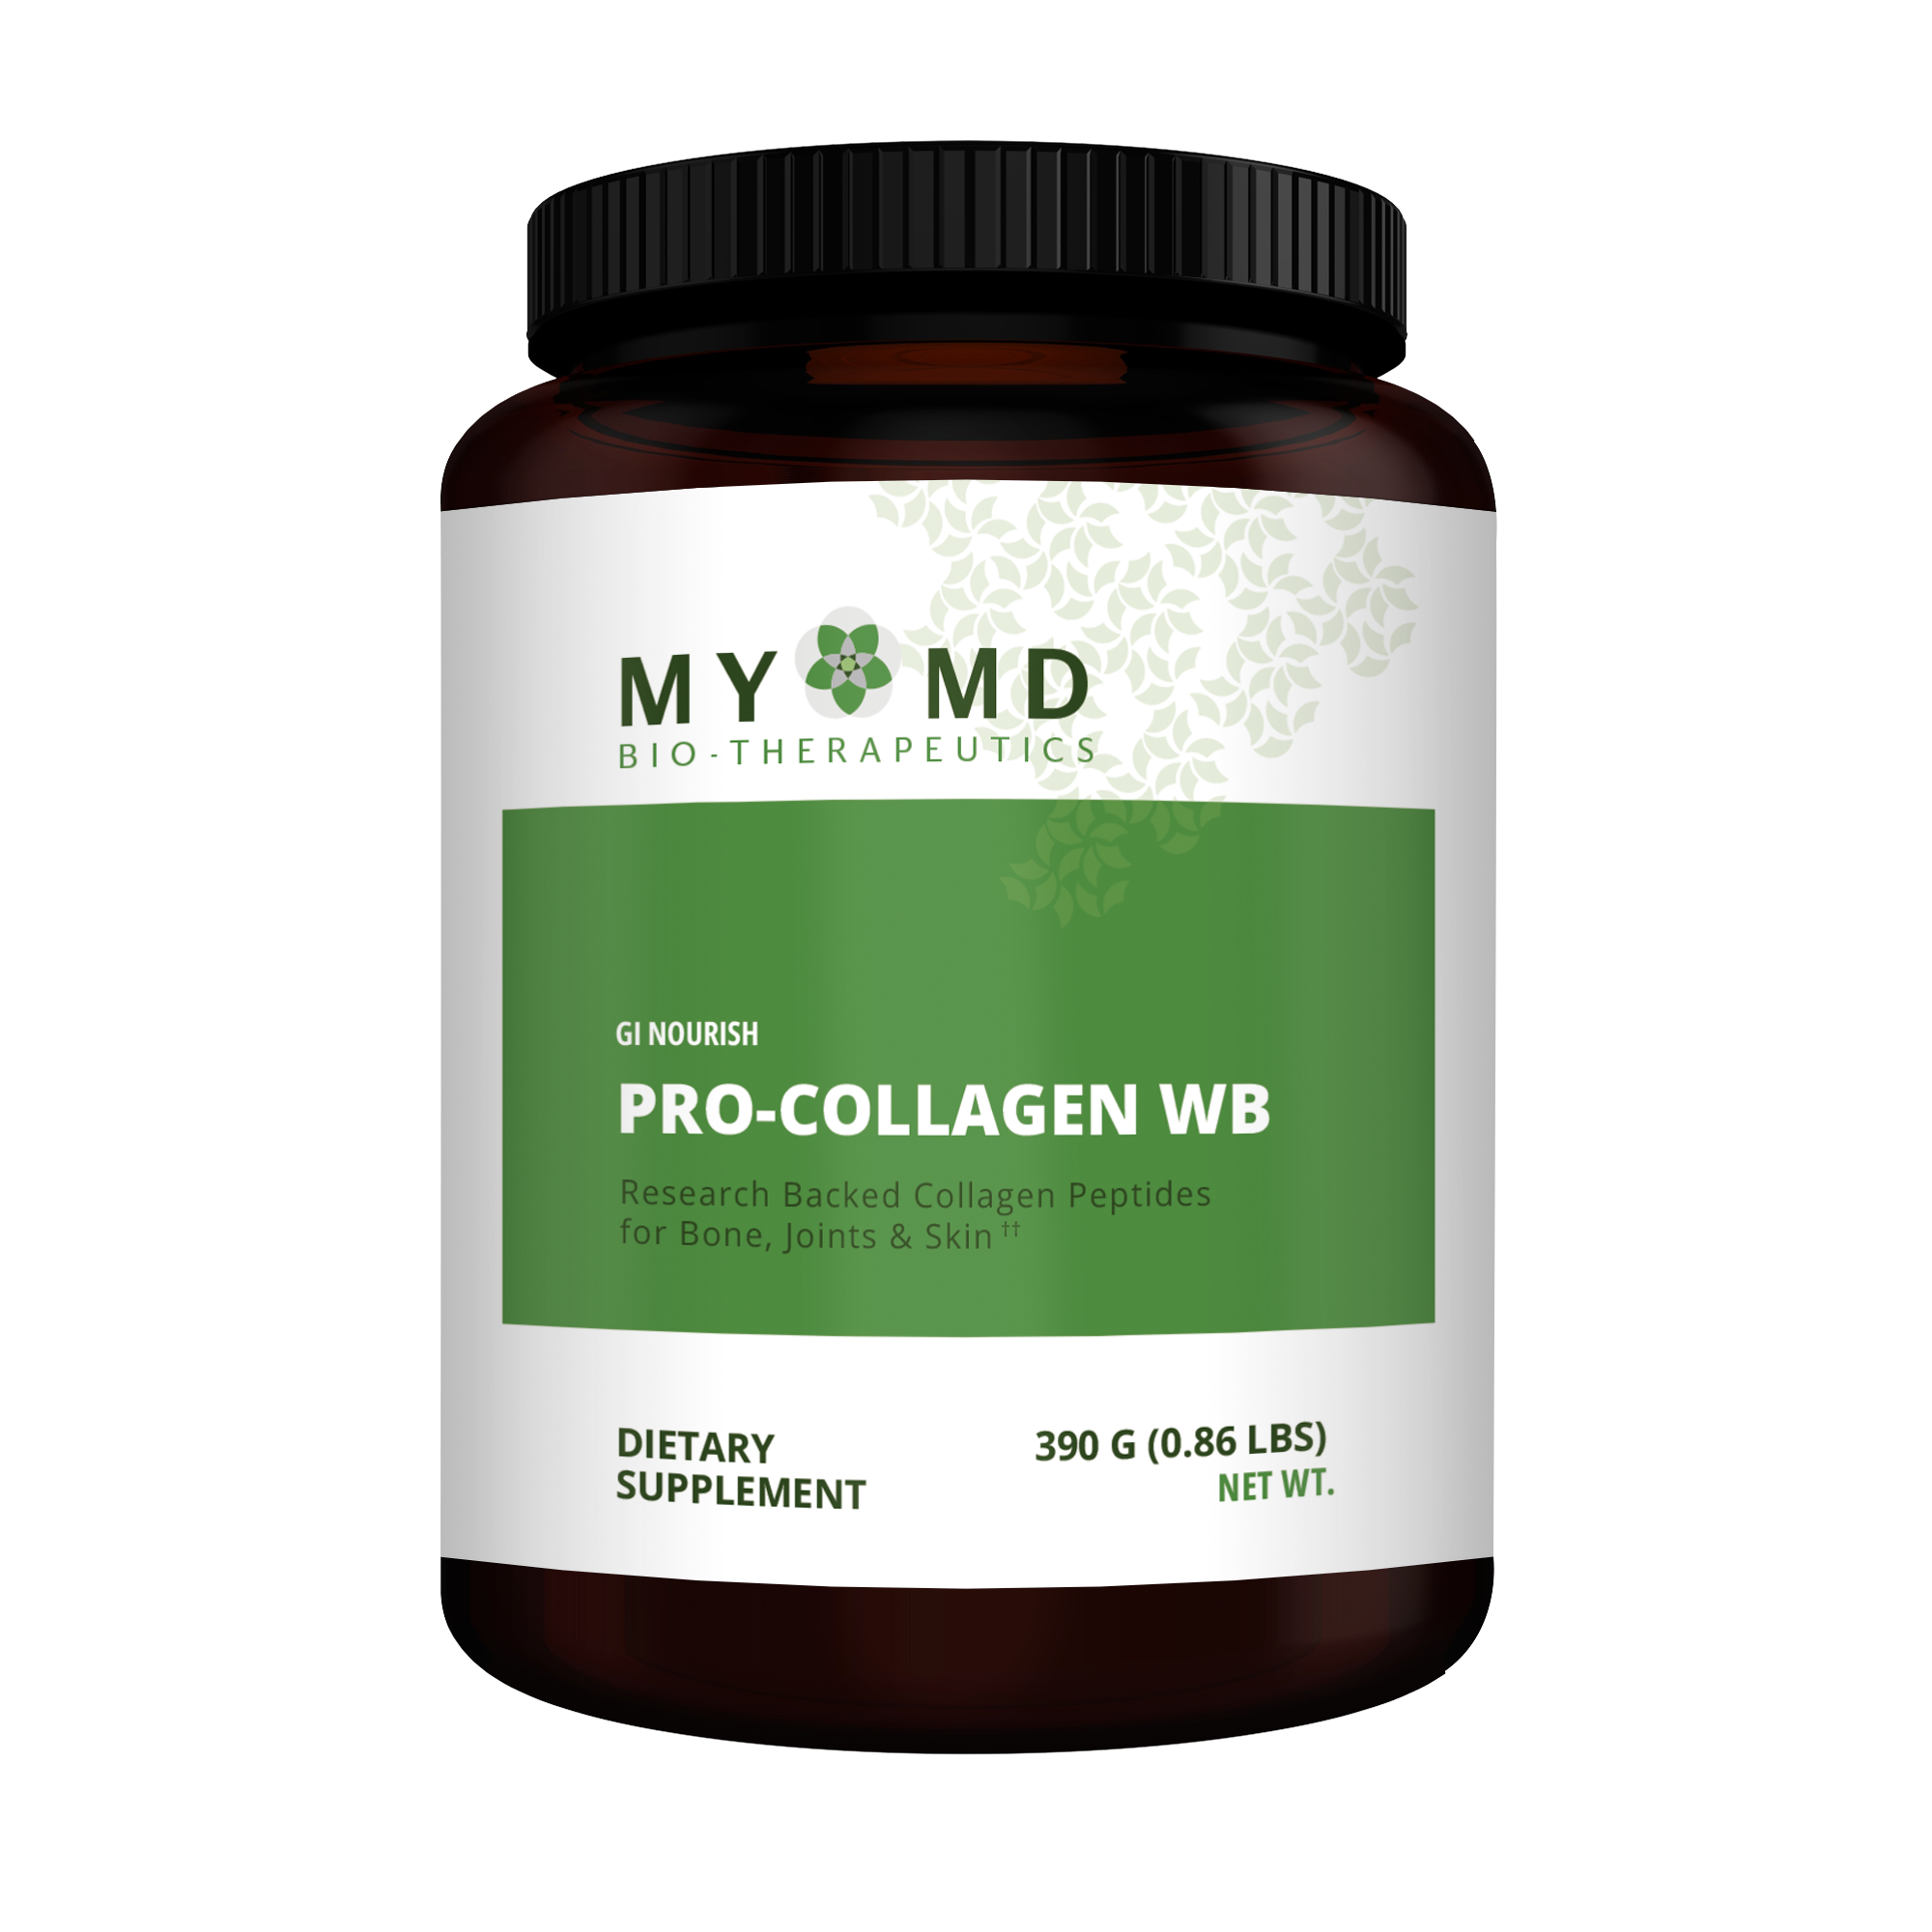 PRO-COLLAGEN WB Medical Grade Collagen